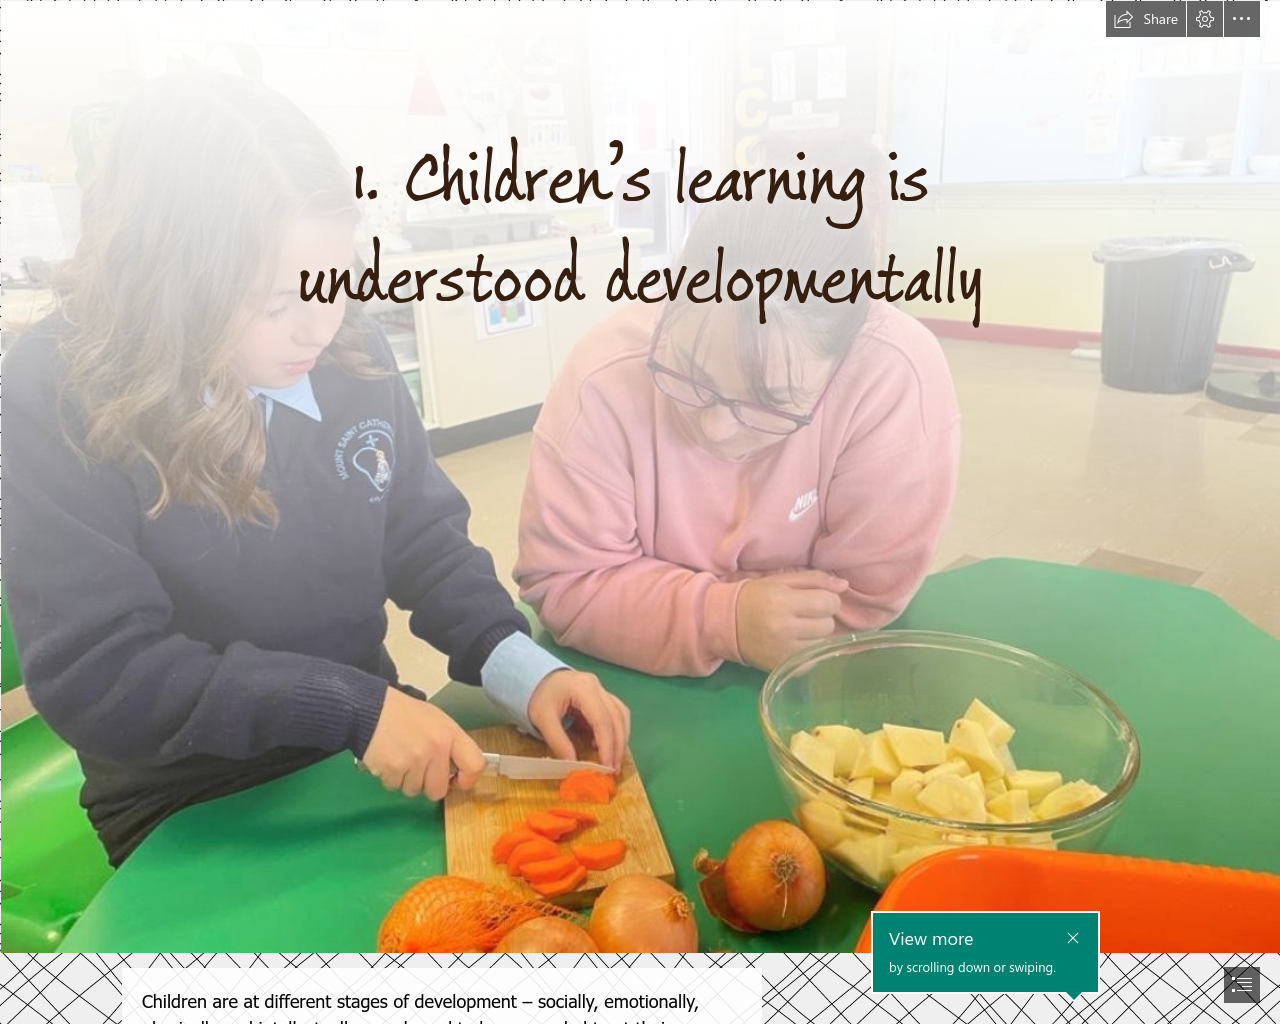 1. Children's learning is understood developmentally